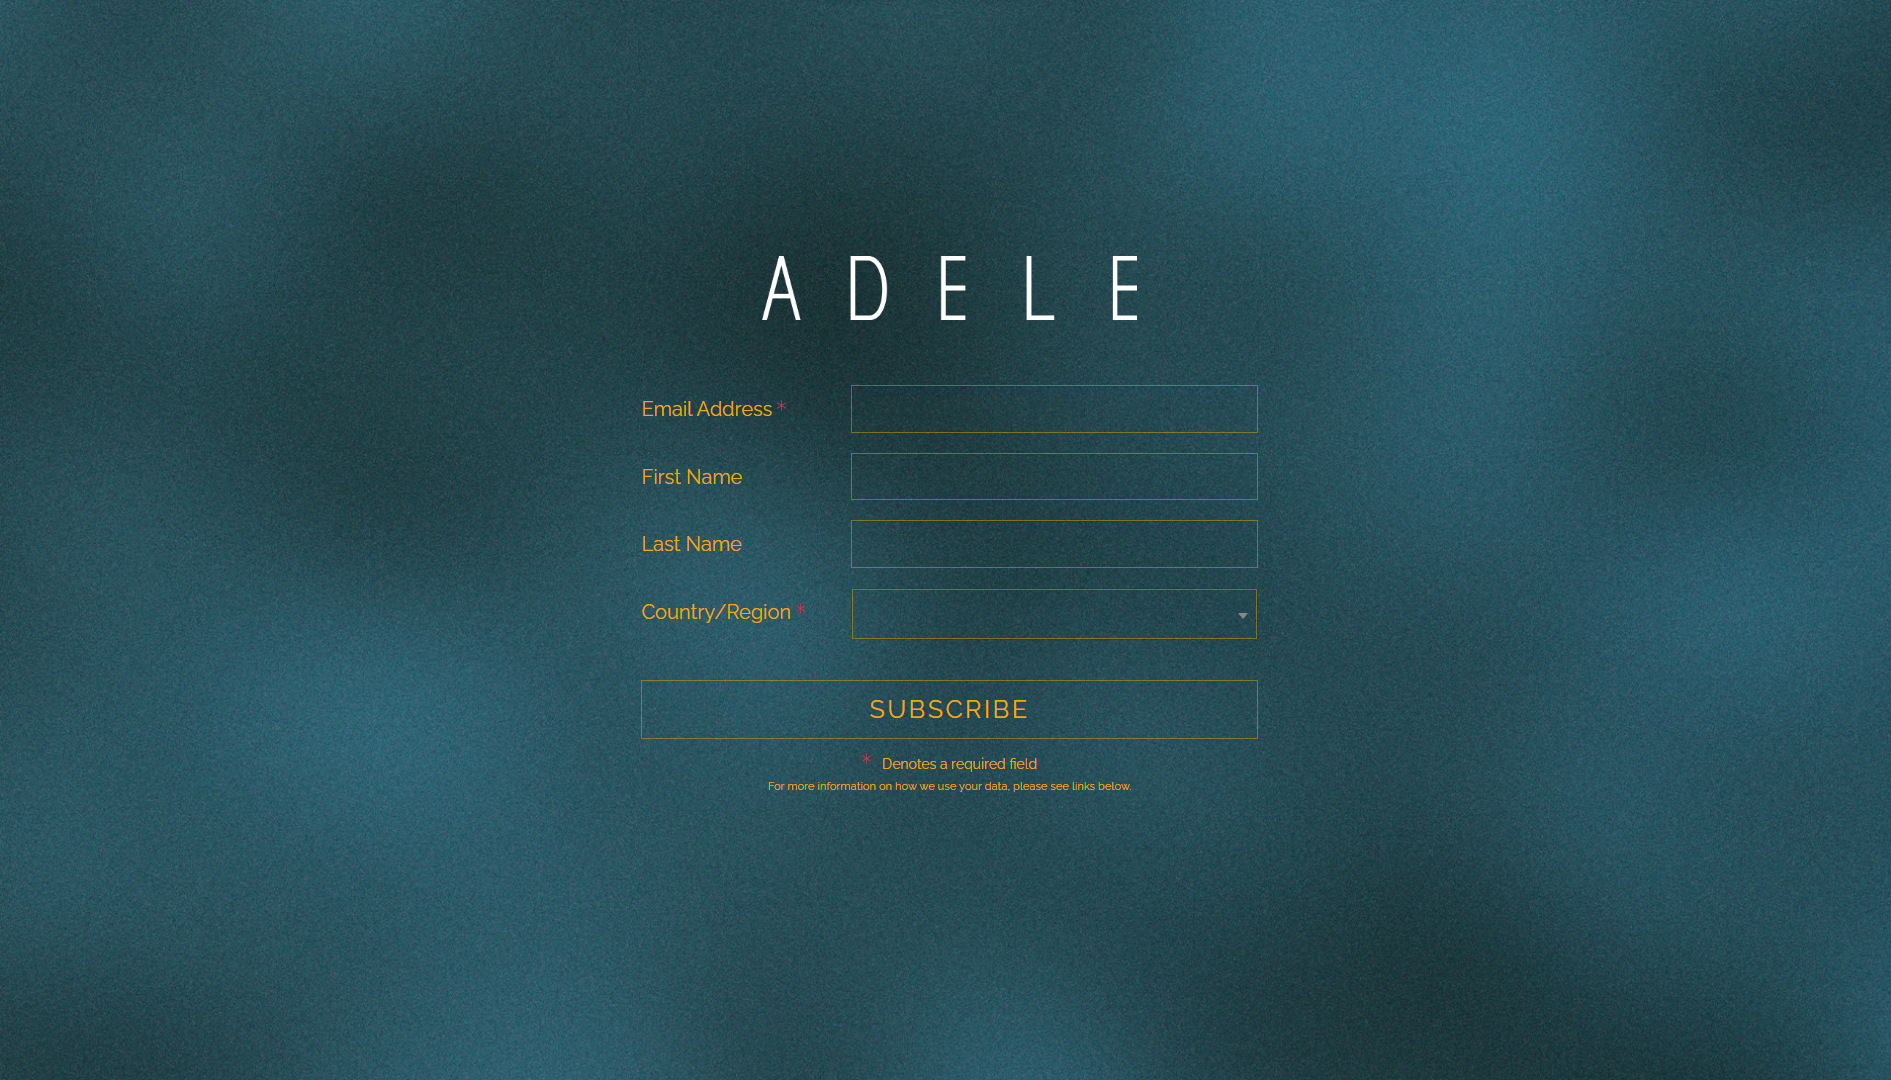 Adele website